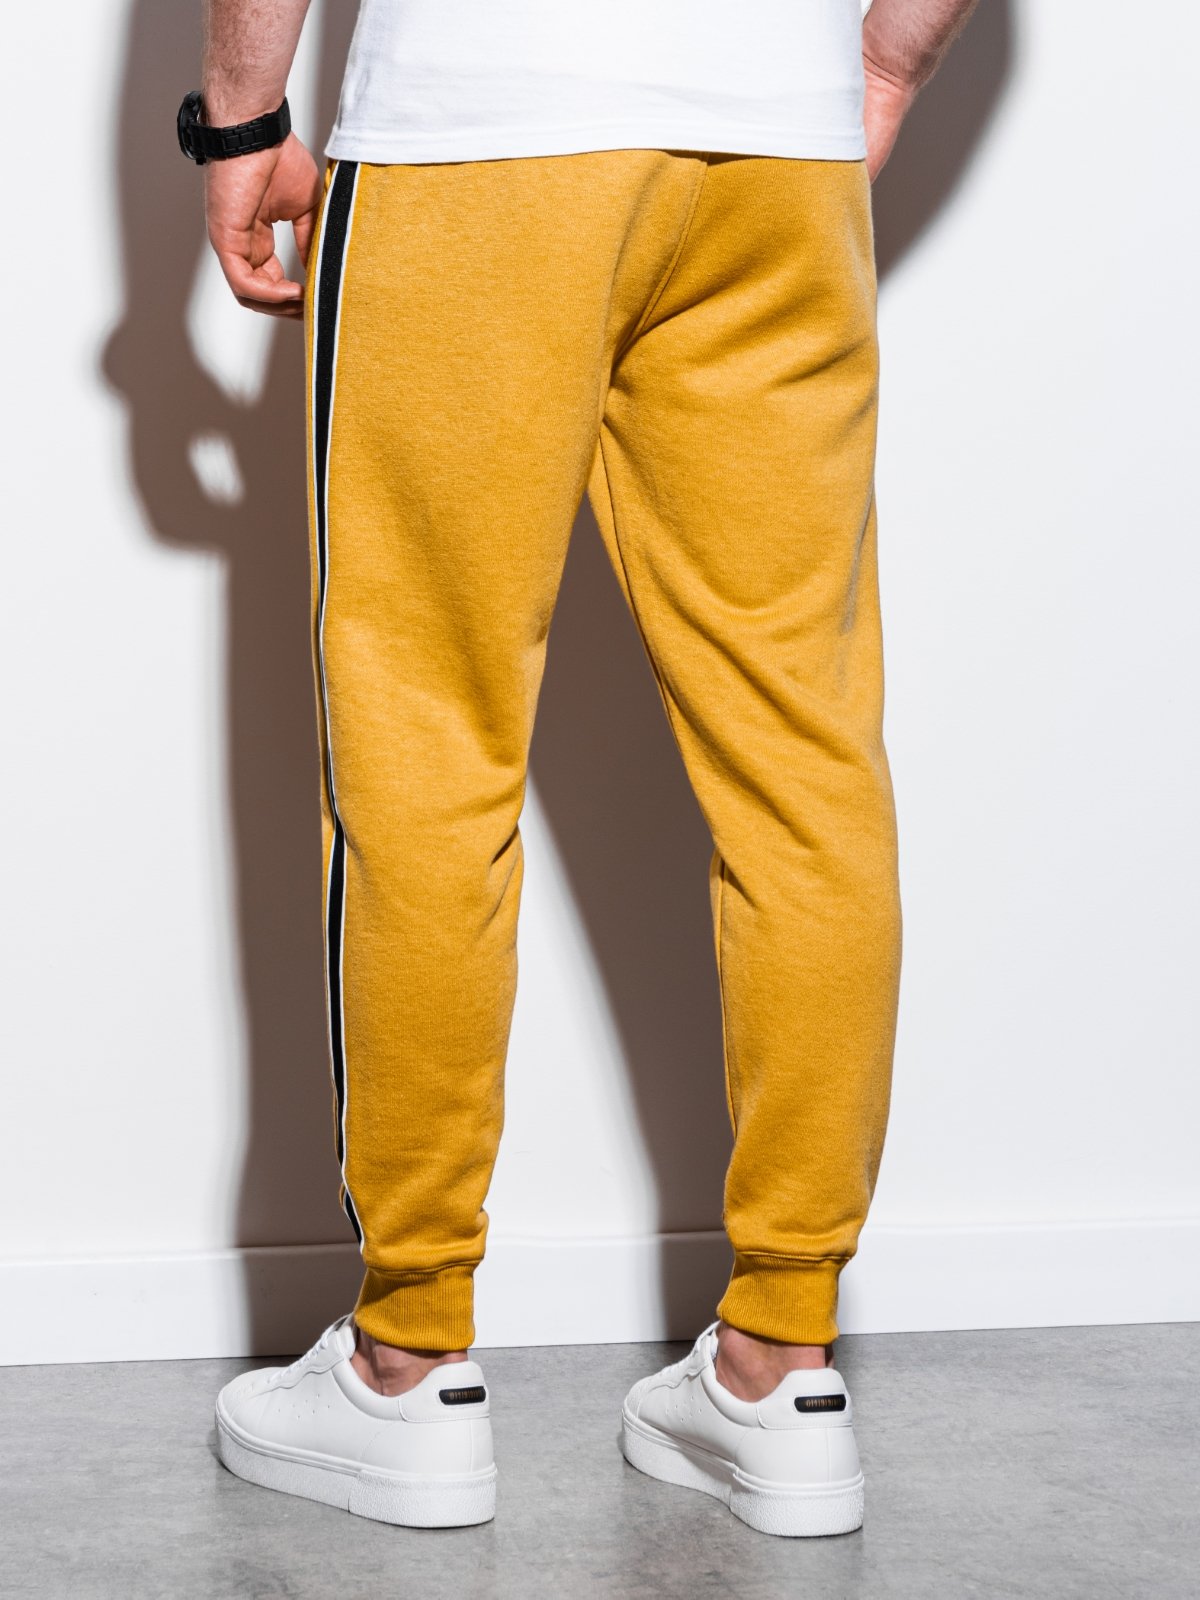 Men's sweatpants - yellow P898  MODONE wholesale - Clothing For Men